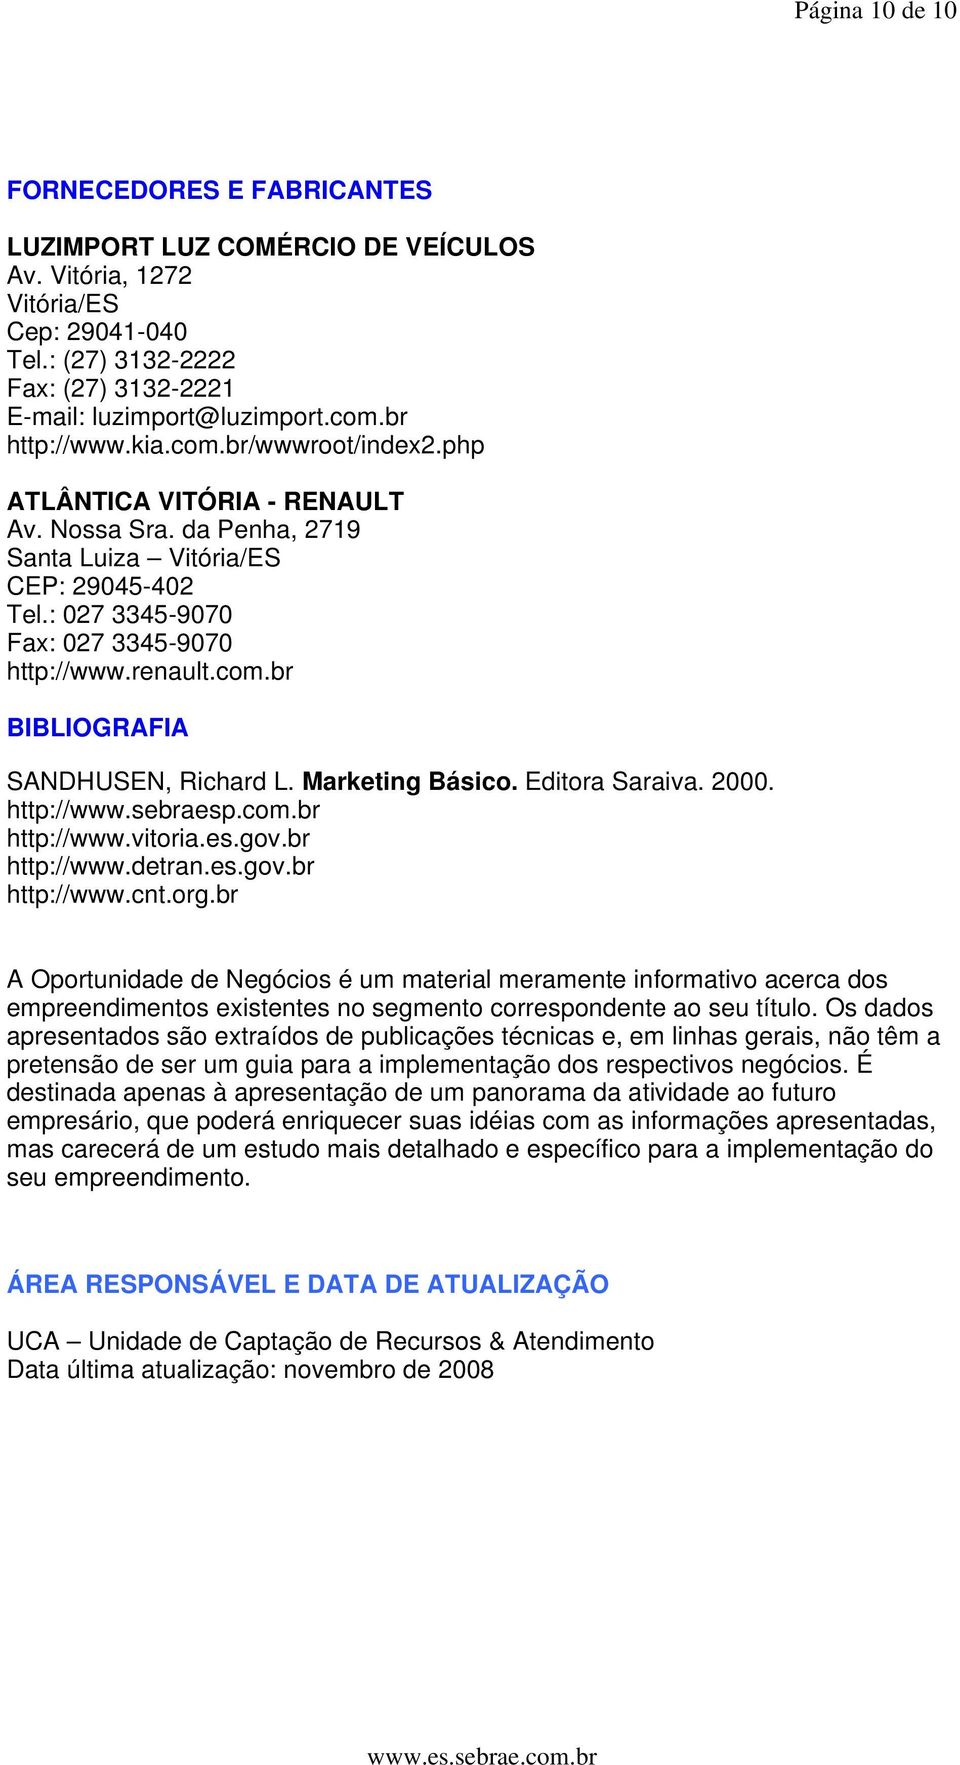 com.br BIBLIOGRAFIA SANDHUSEN, Richard L. Marketing Básico. Editora Saraiva. 2000. http://www.sebraesp.com.br http://www.vitoria.es.gov.br http://www.detran.es.gov.br http://www.cnt.org.